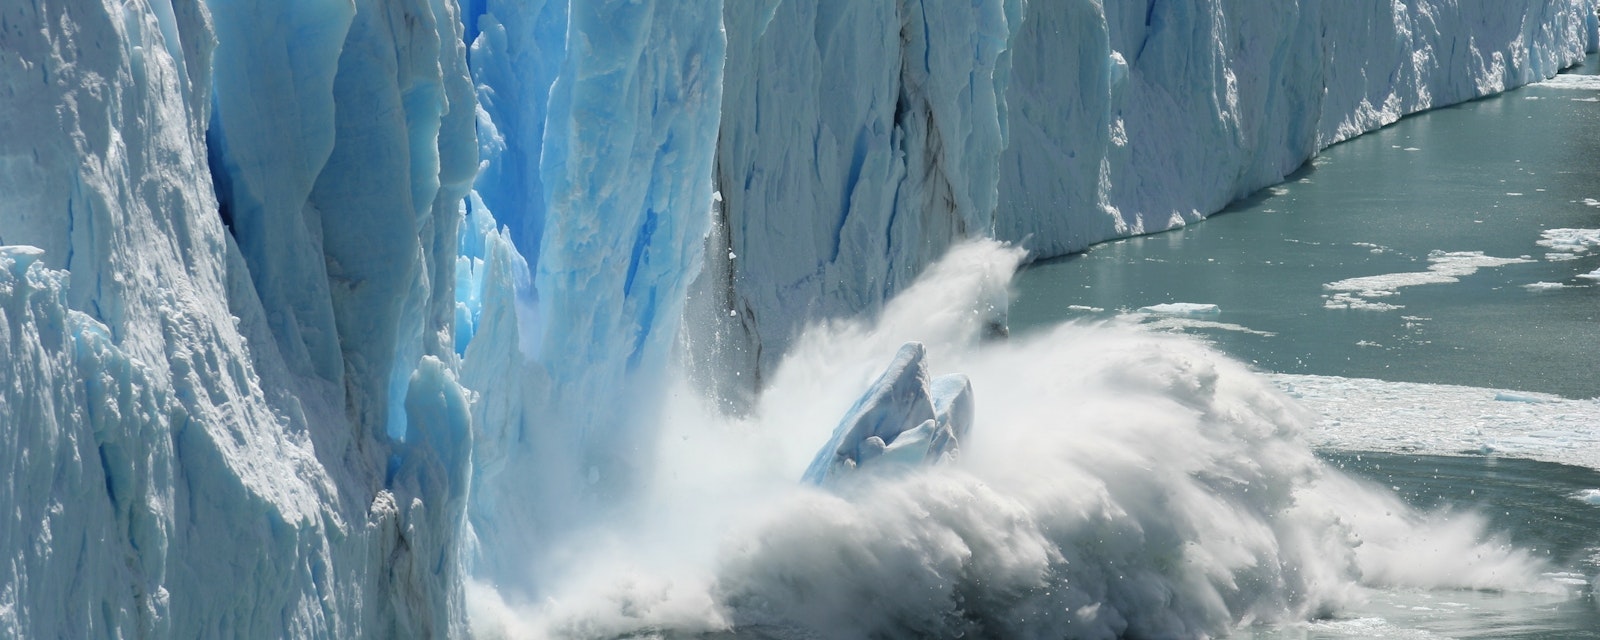 Climate,Change,-,Antarctic,Melting,Glacier,In,A,Global,Warming